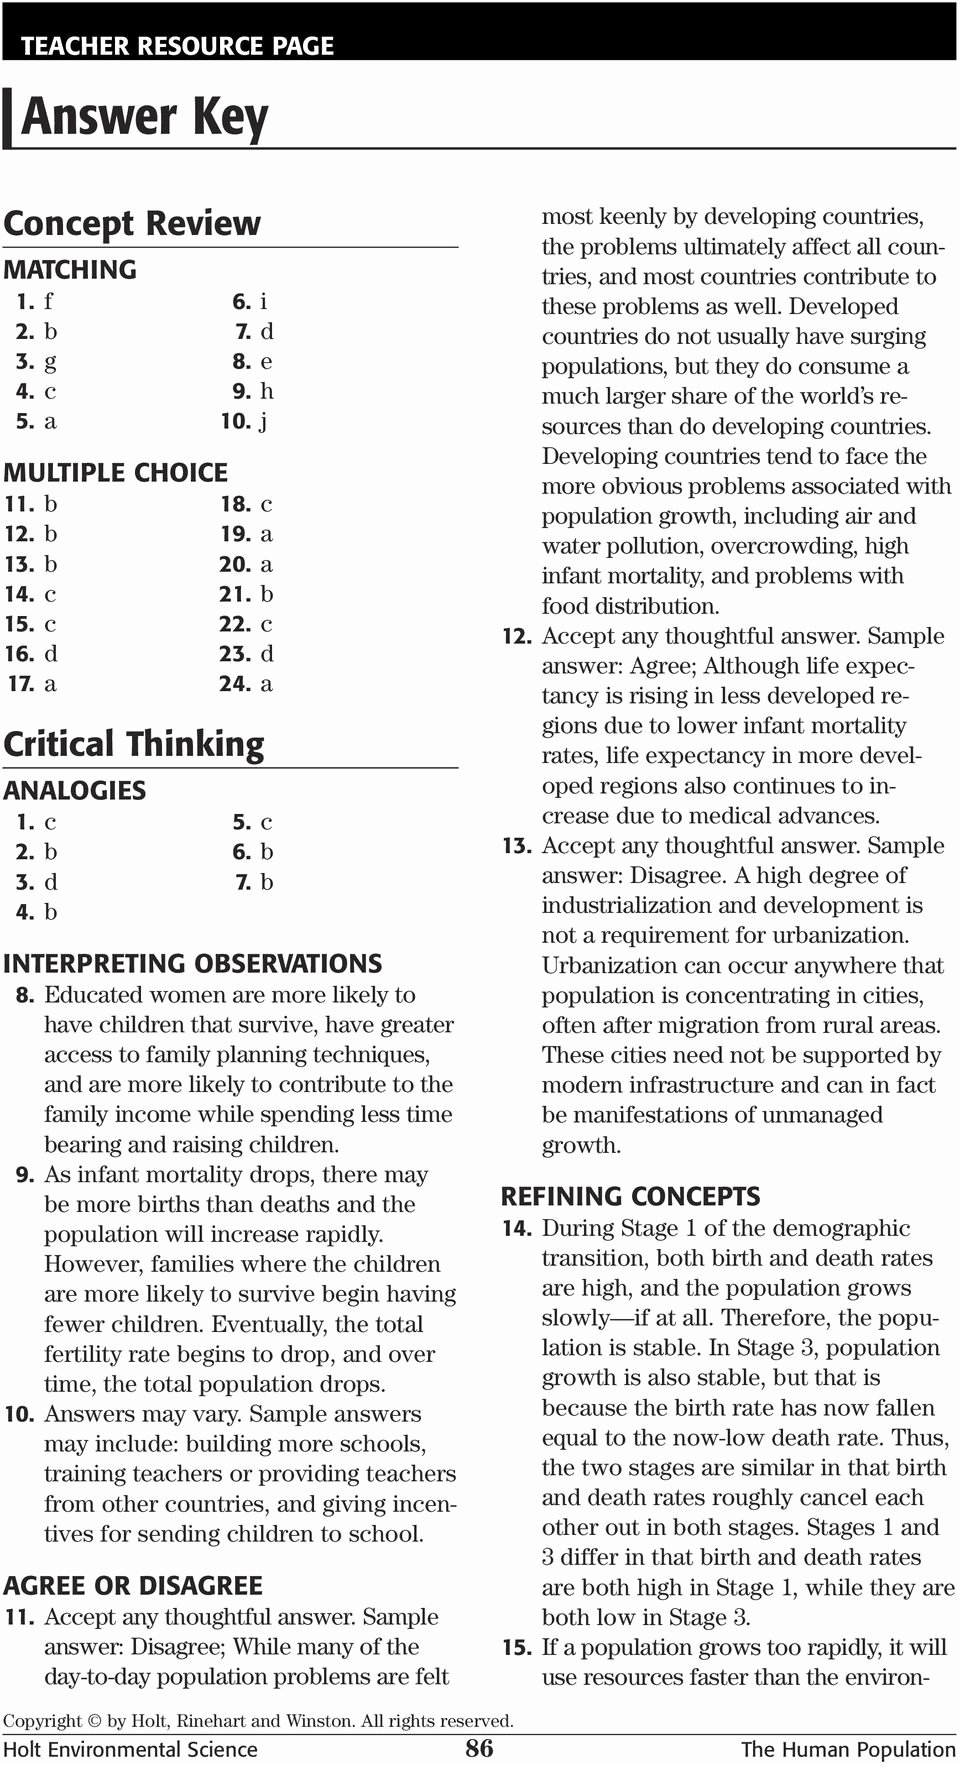 Skills Worksheet Critical Thinking Analogies Lovely Critical Thinking Worksheets Yooob